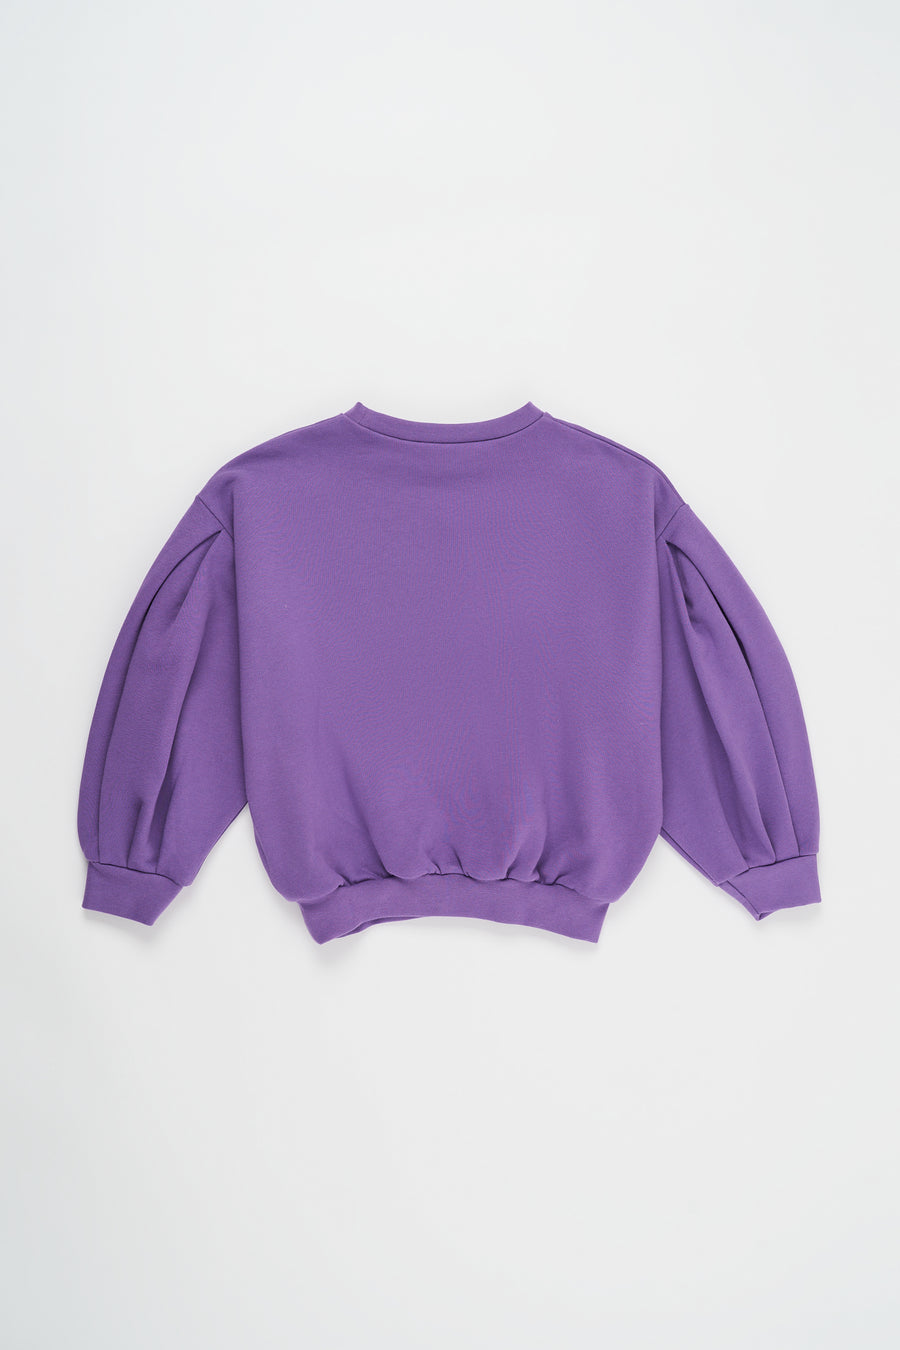 Maison Mangostan - logo sweatshirt - purple